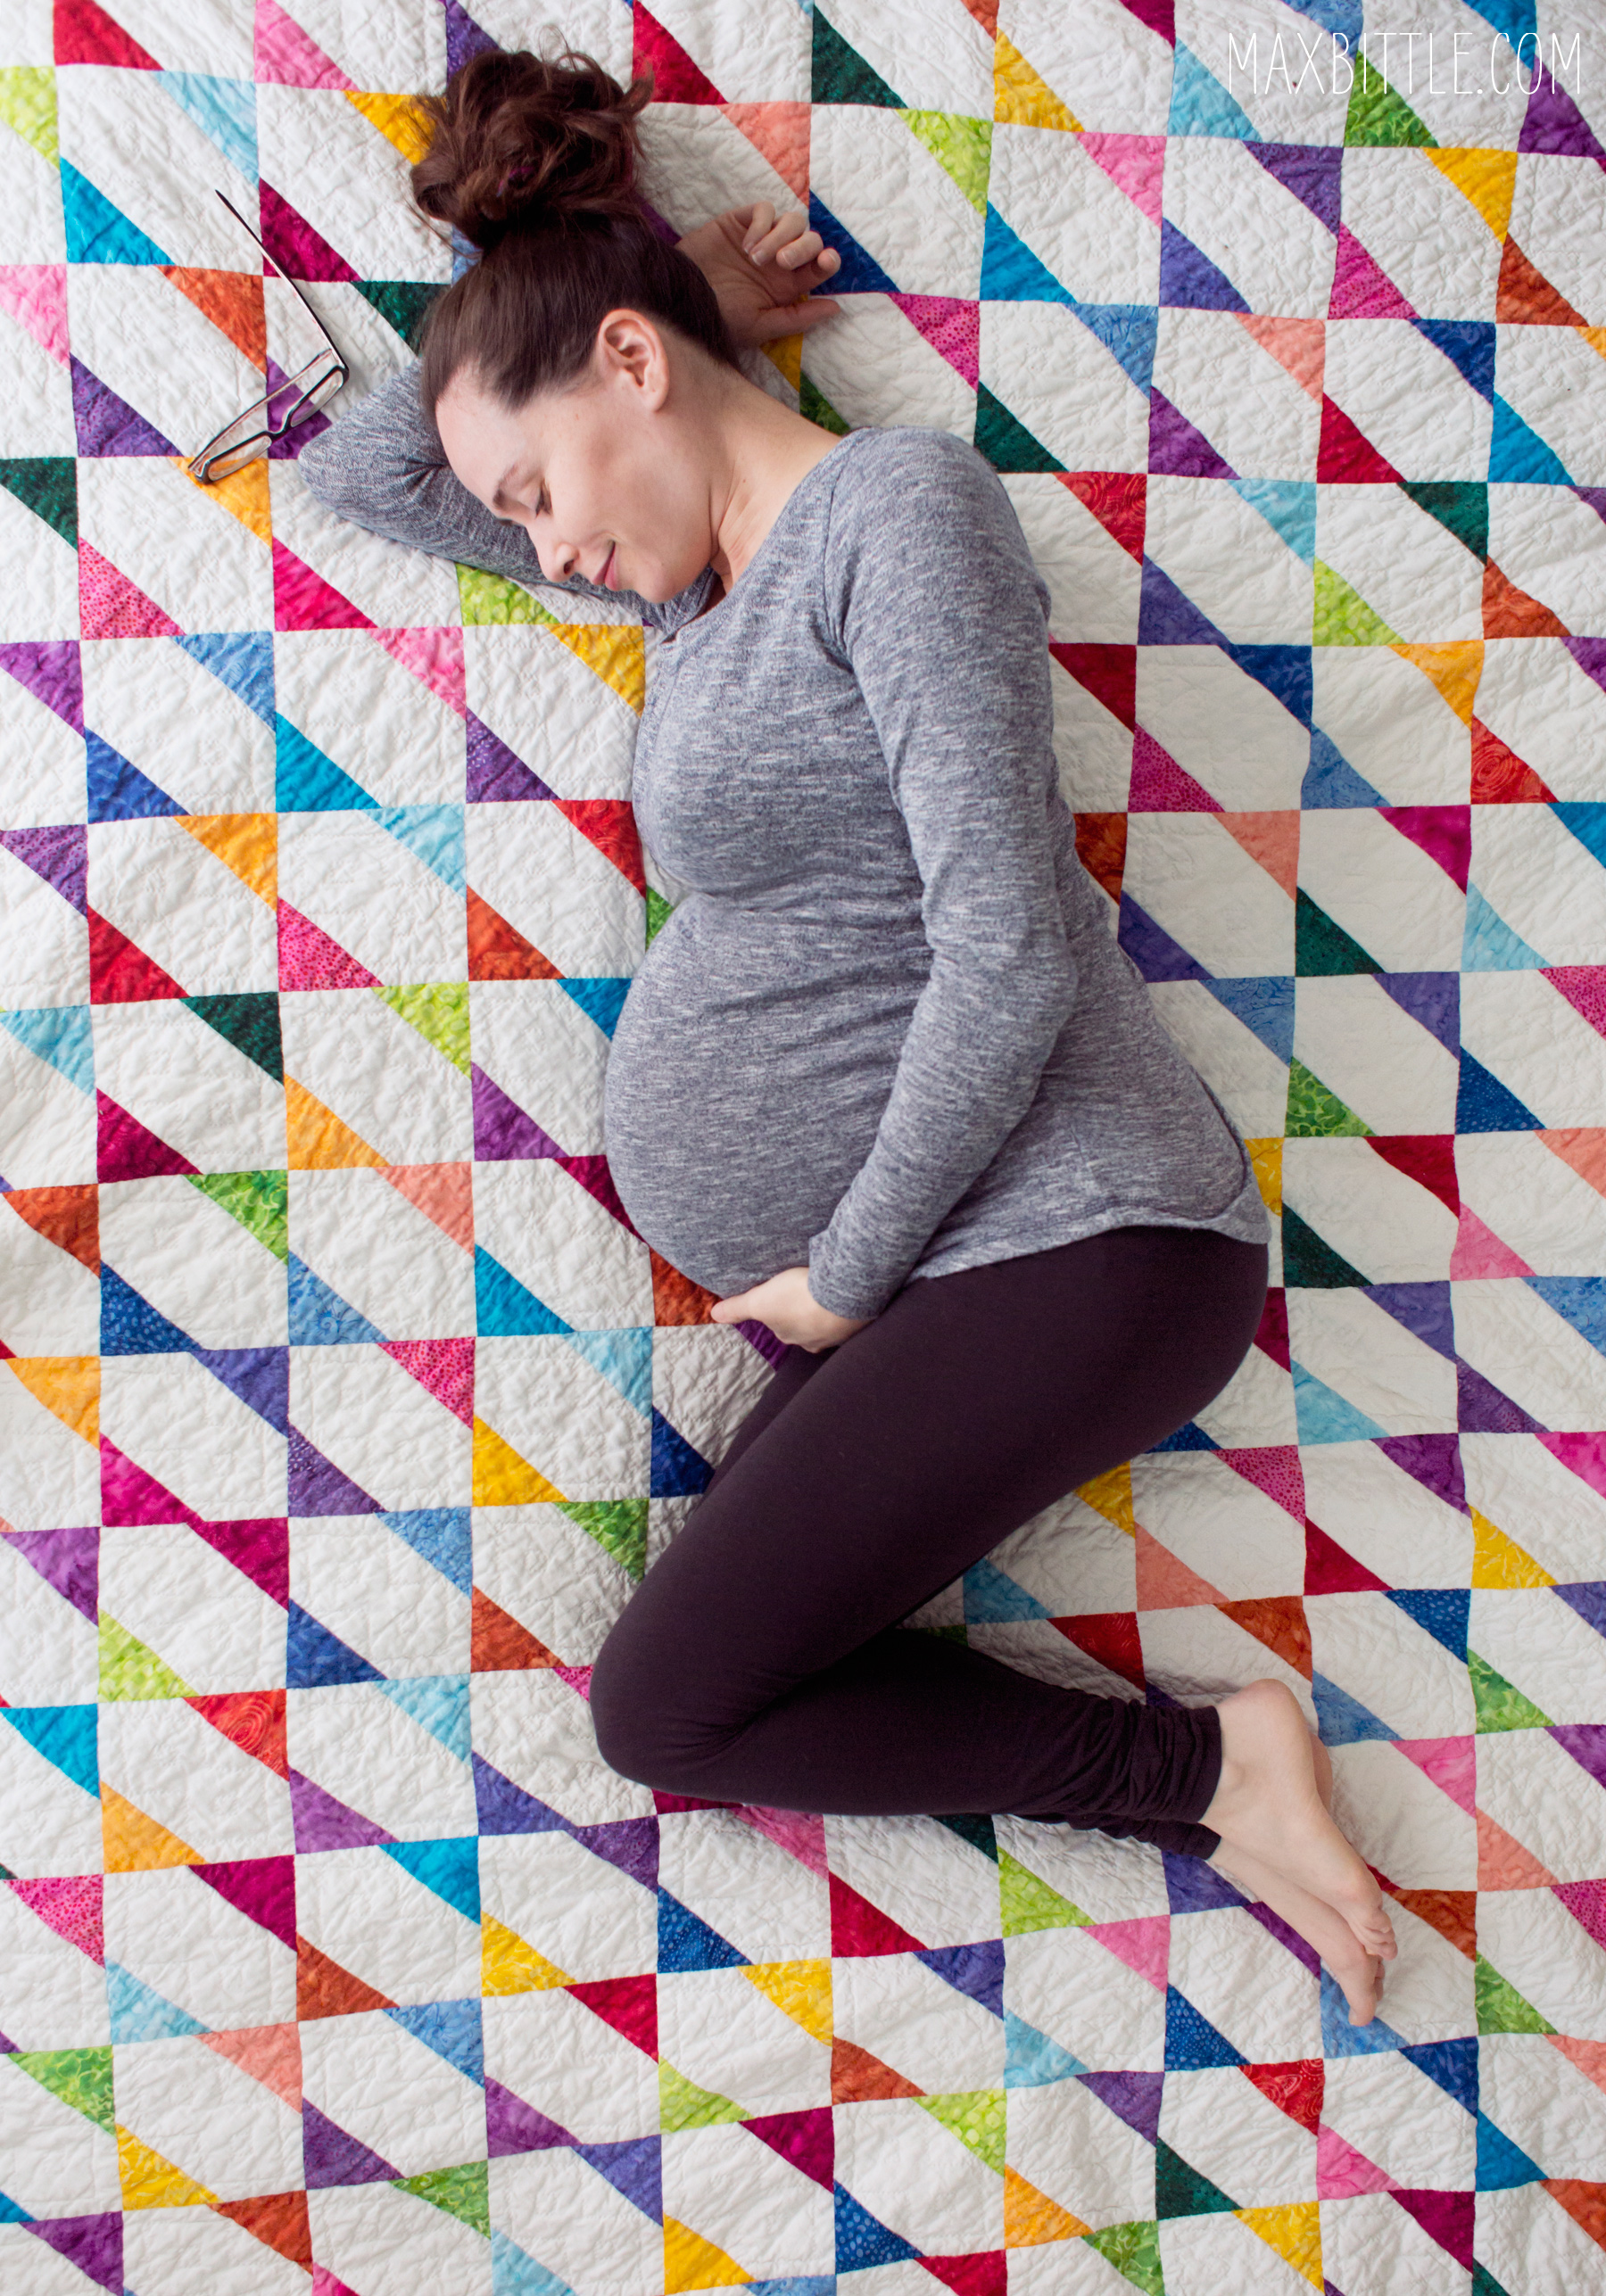 Artistic Maternity Photo at 40 Weeks Pregnant – Columbia, MO